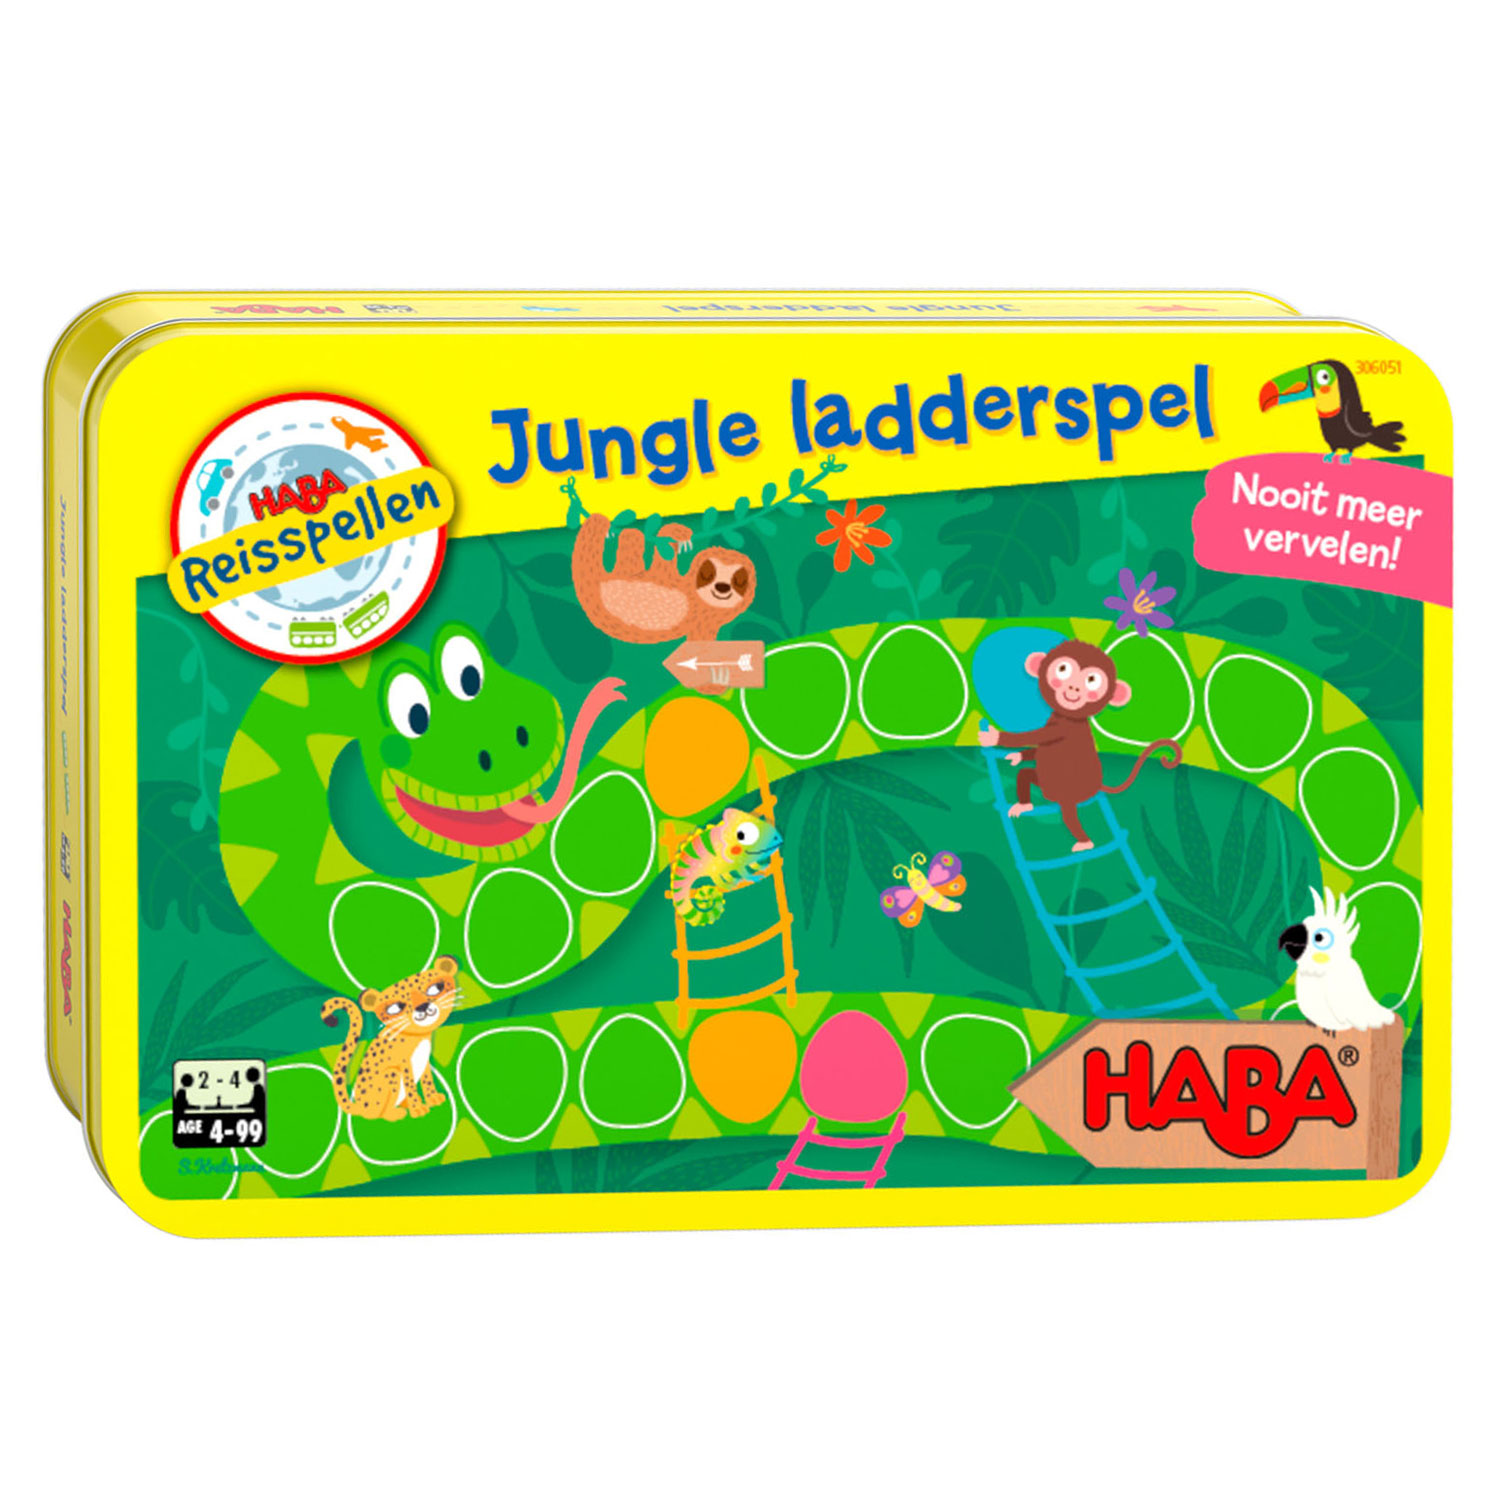 krassen Maan Missie Haba Reisspel - Jungle Ladderspel online kopen | Lobbes Speelgoed